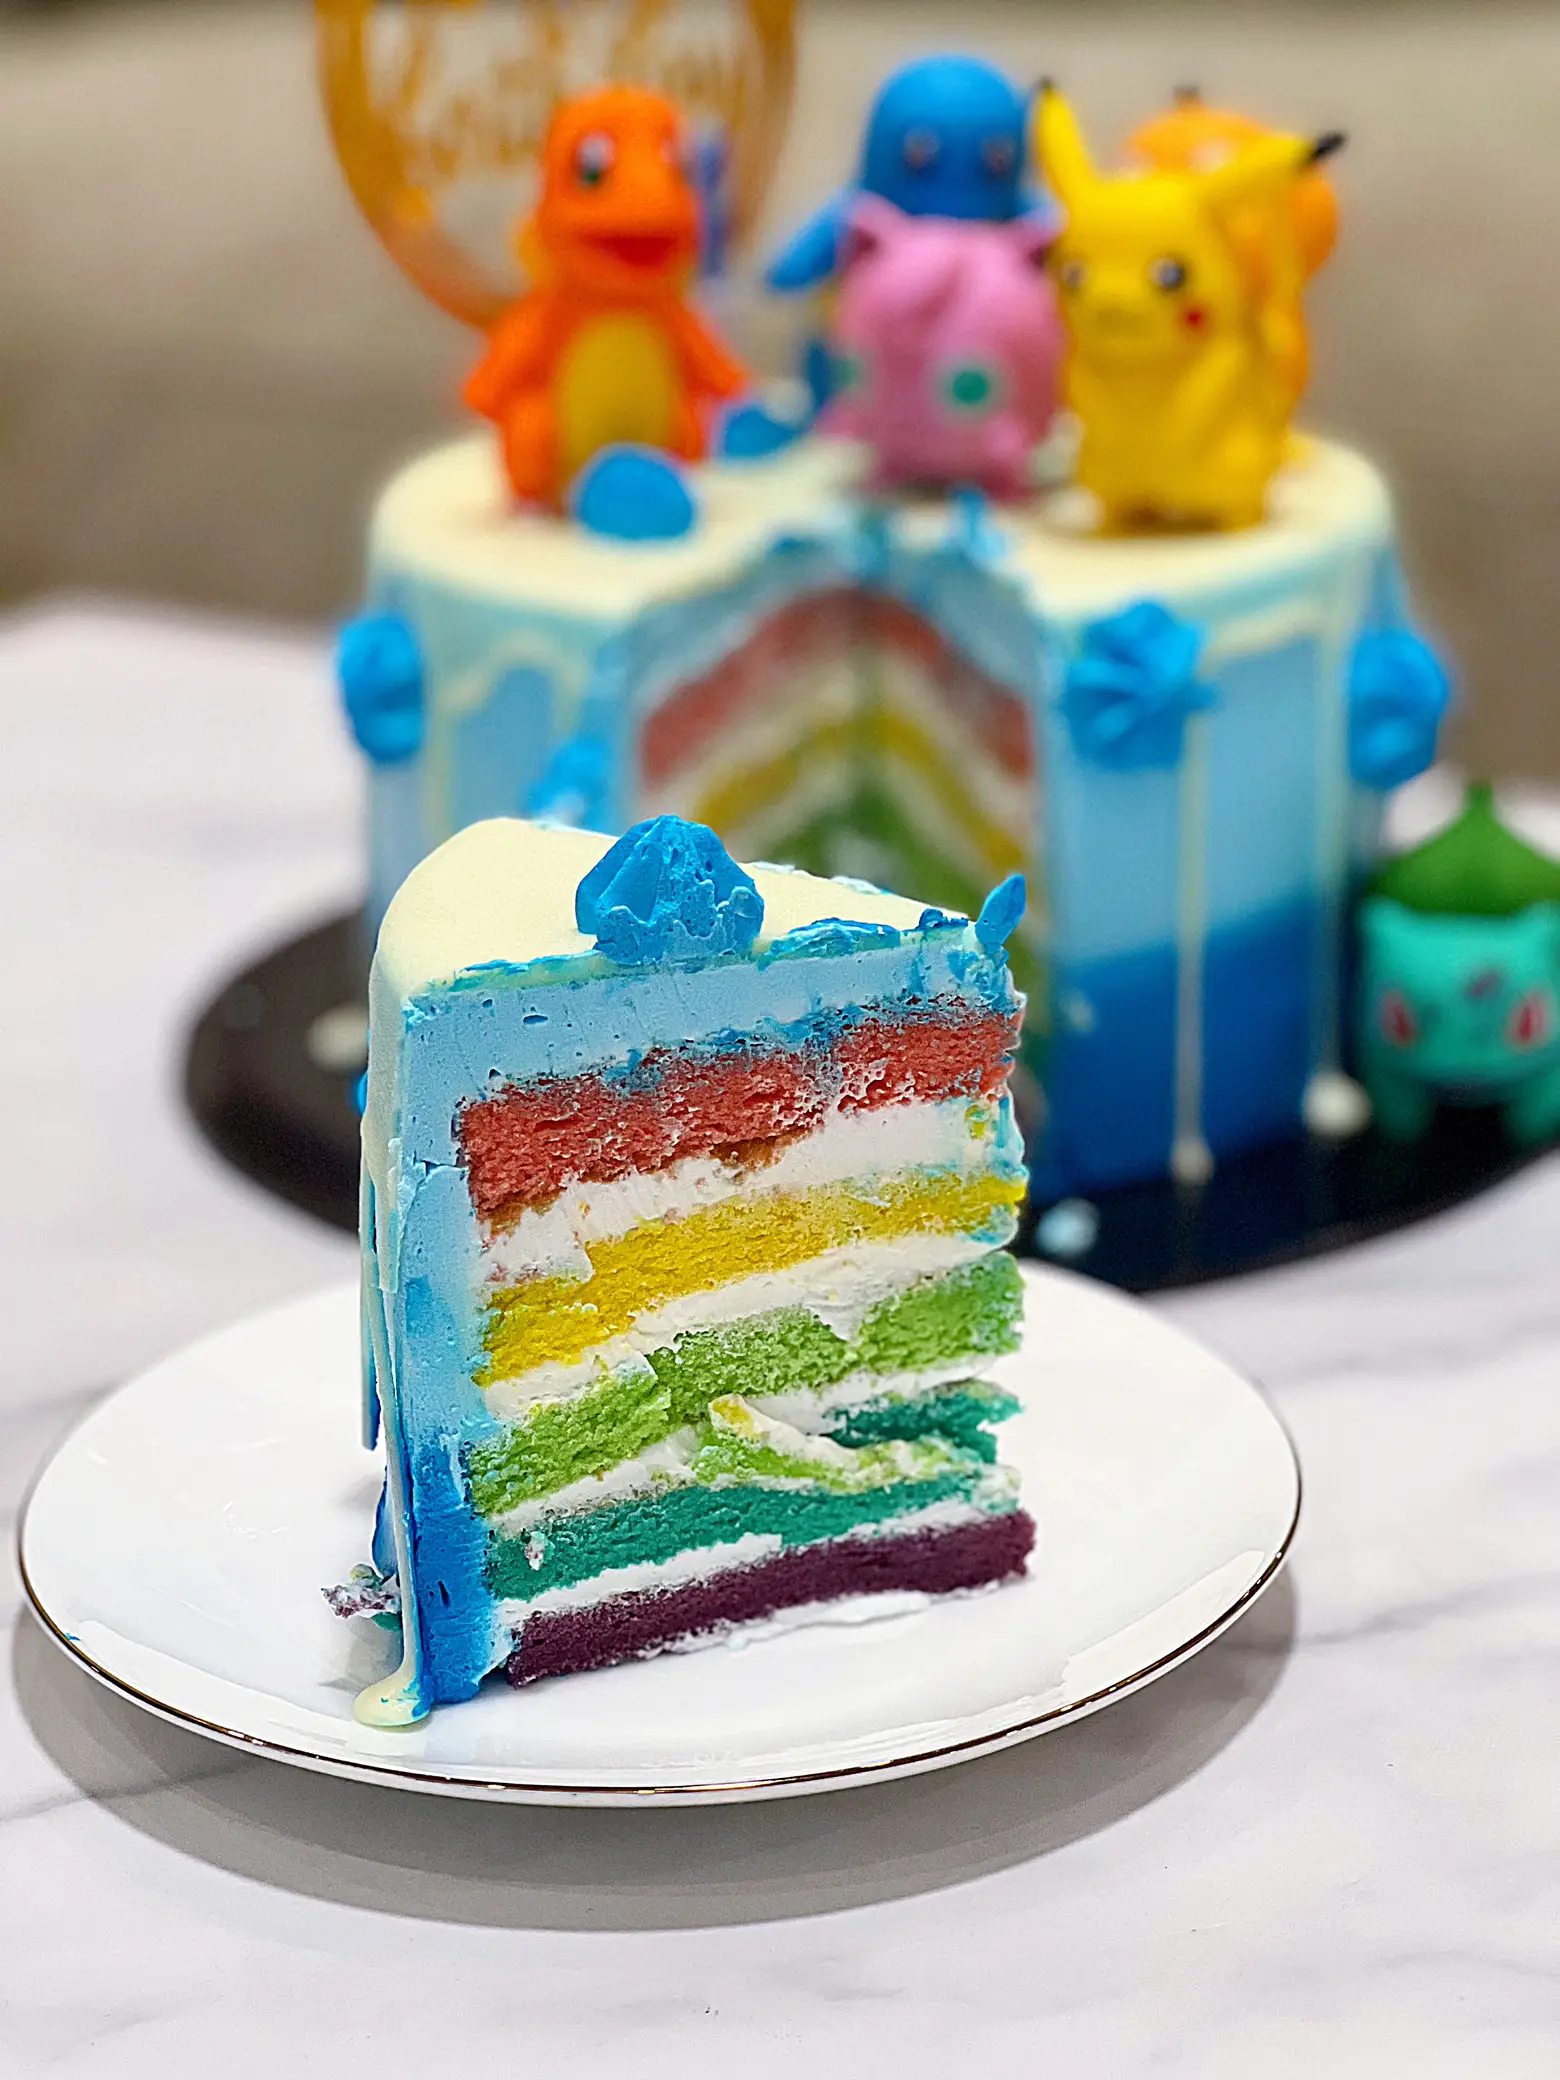 Pokémon themed Birthday cake⚡️⚡️⚡️ | Gallery posted by ...